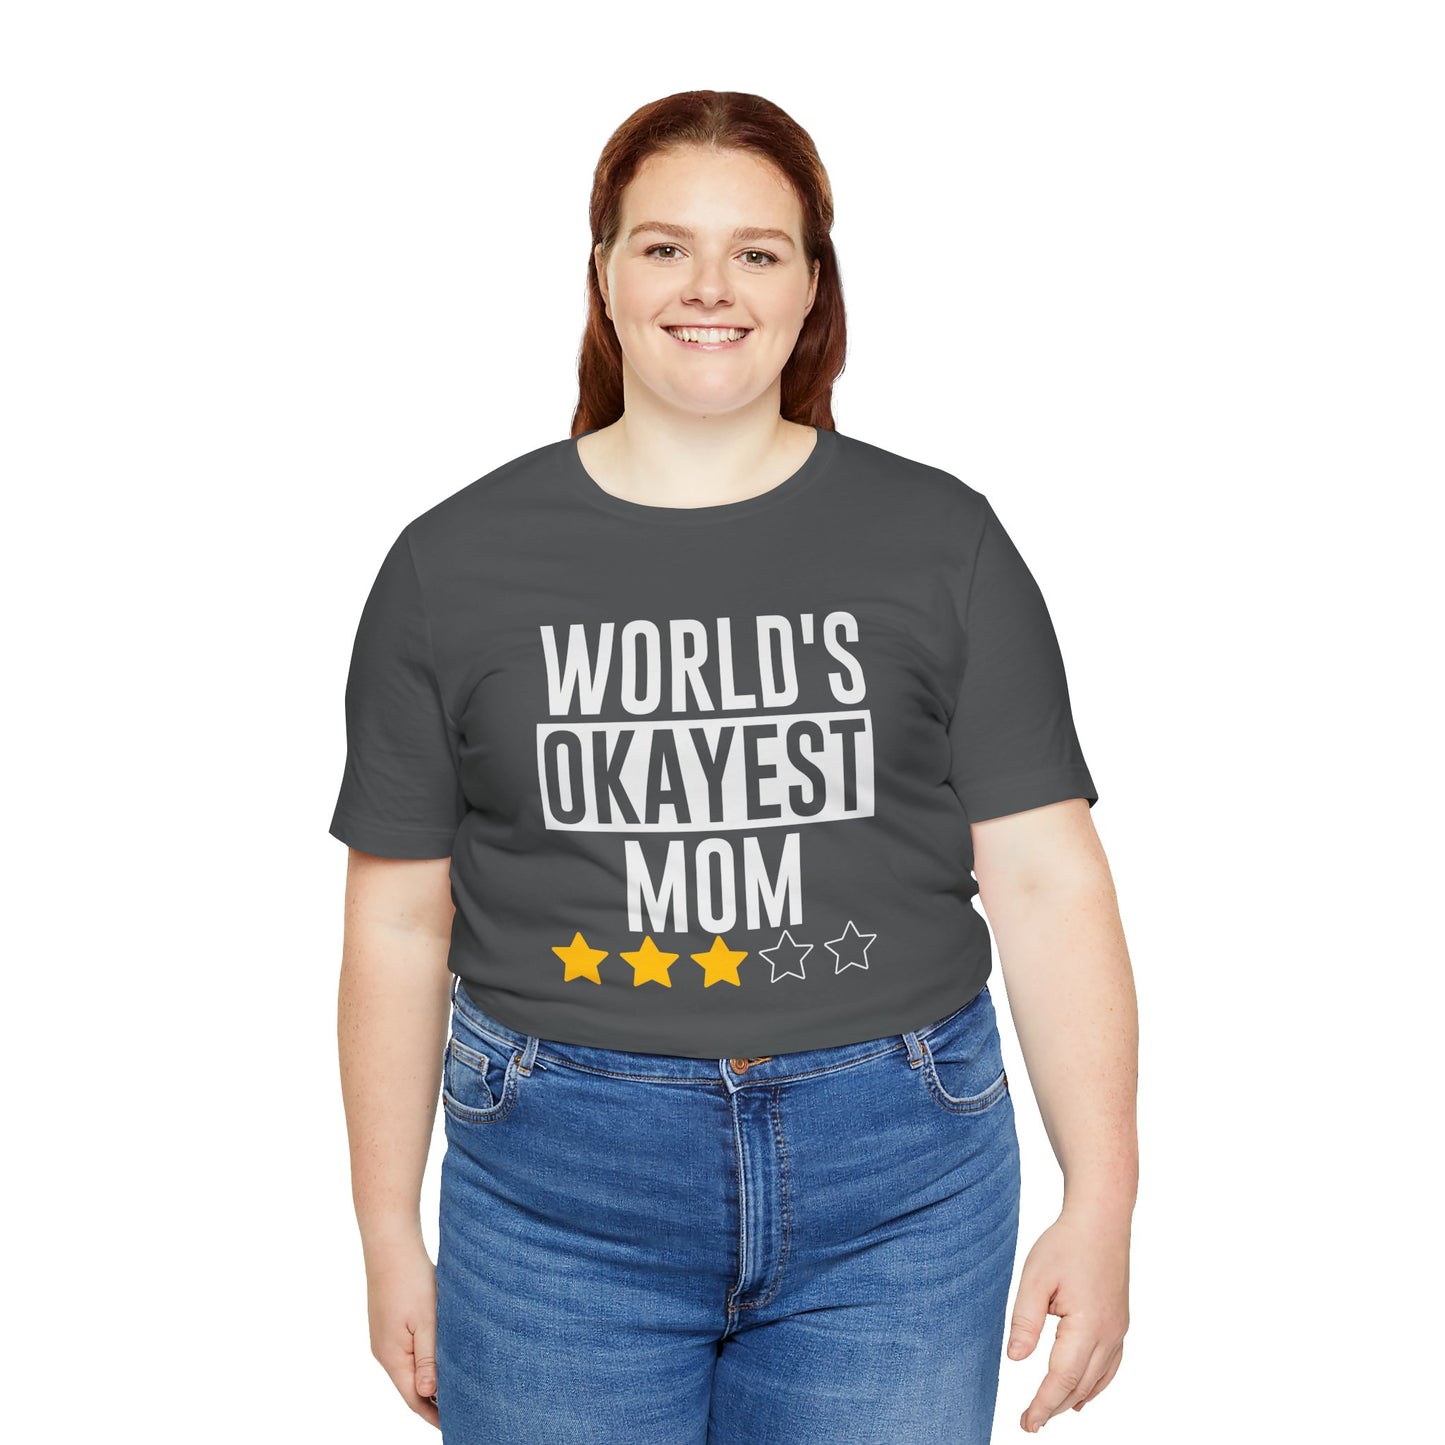 Worlds Okayest Mom - Unisex Jersey Short Sleeve Tee